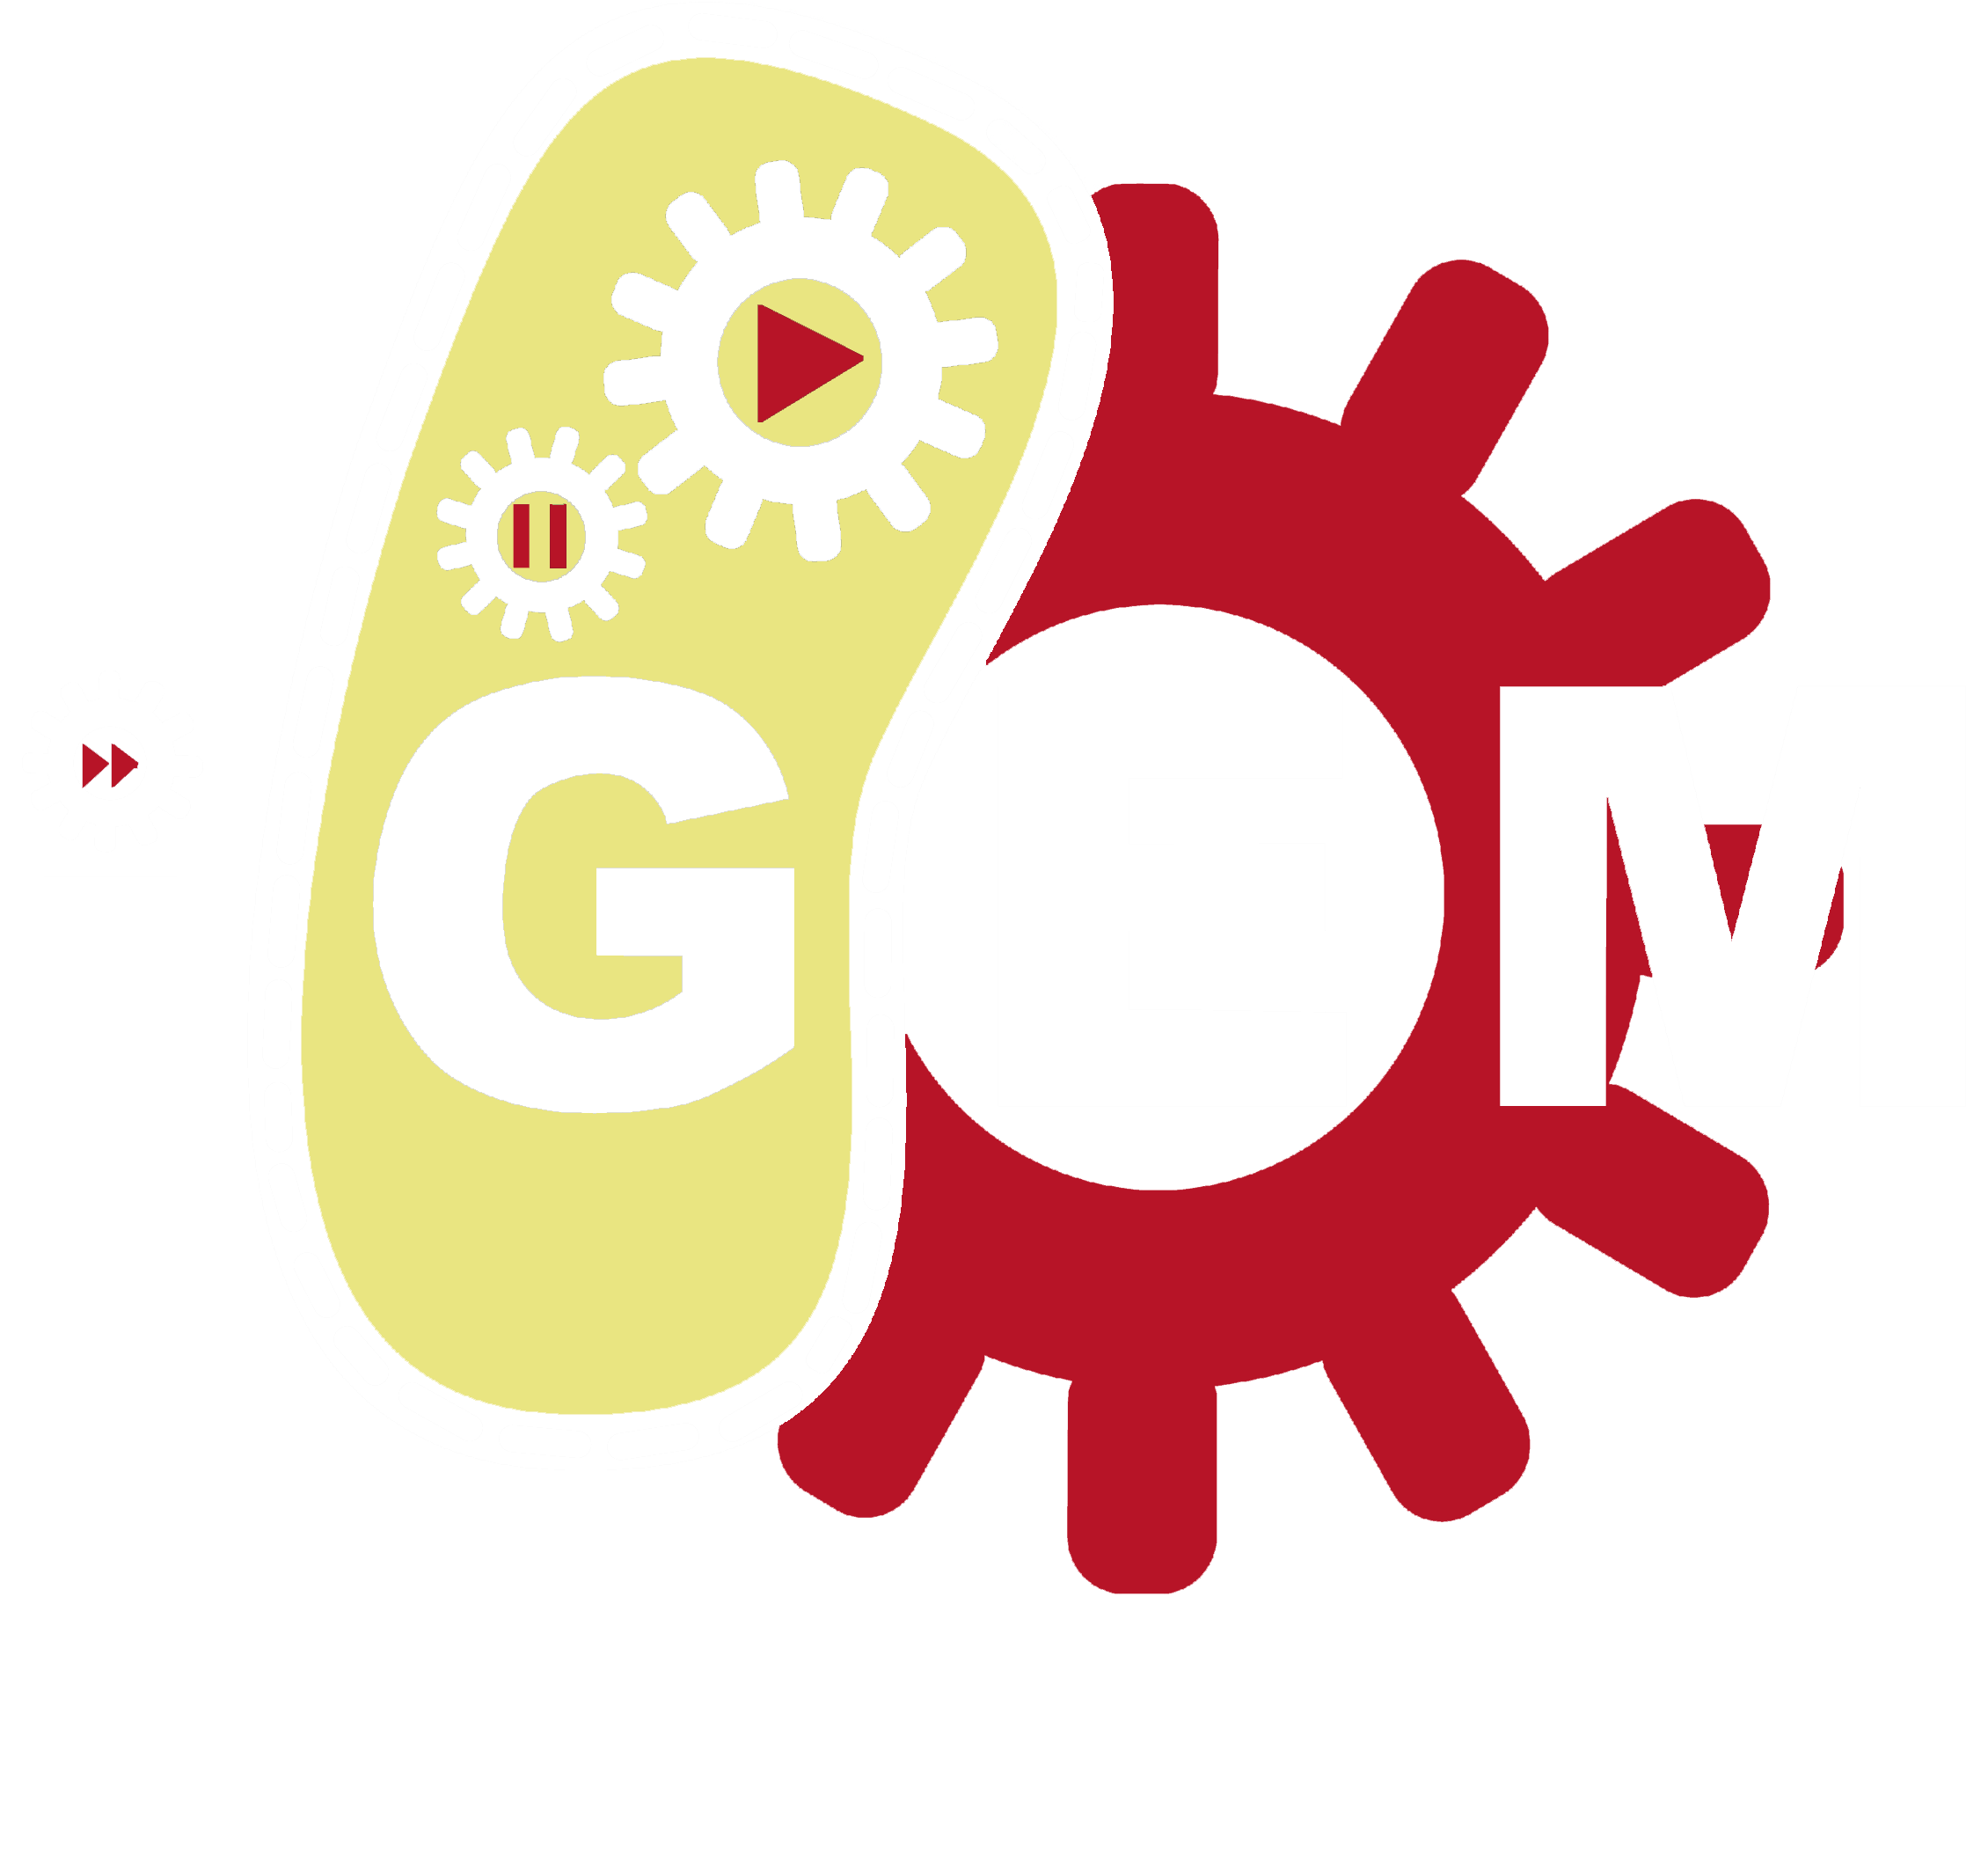 Team Ucsf Wiki Flicks 2015 Igem Org Rh 2015 Igem Org - International Genetically Engineered Machine (2400x2250)